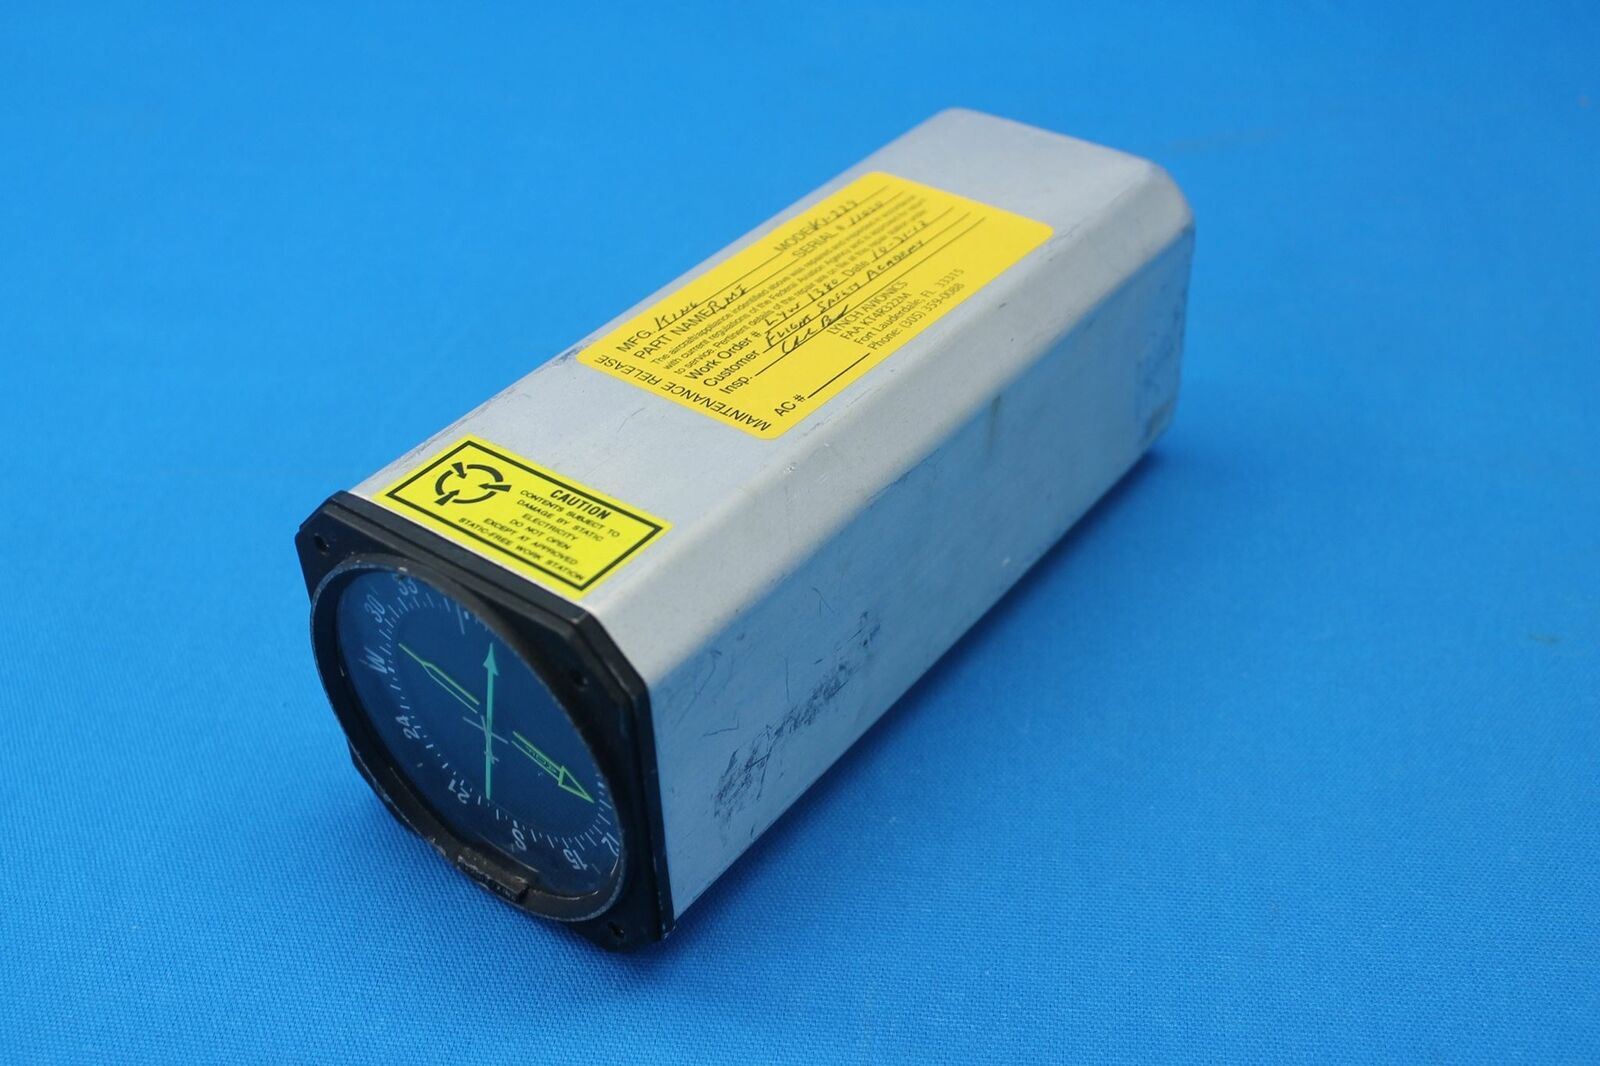 066-3038-00 w/Yellow Tag Bendix/King KI 229 Radio Magnetic Indicator P/N 